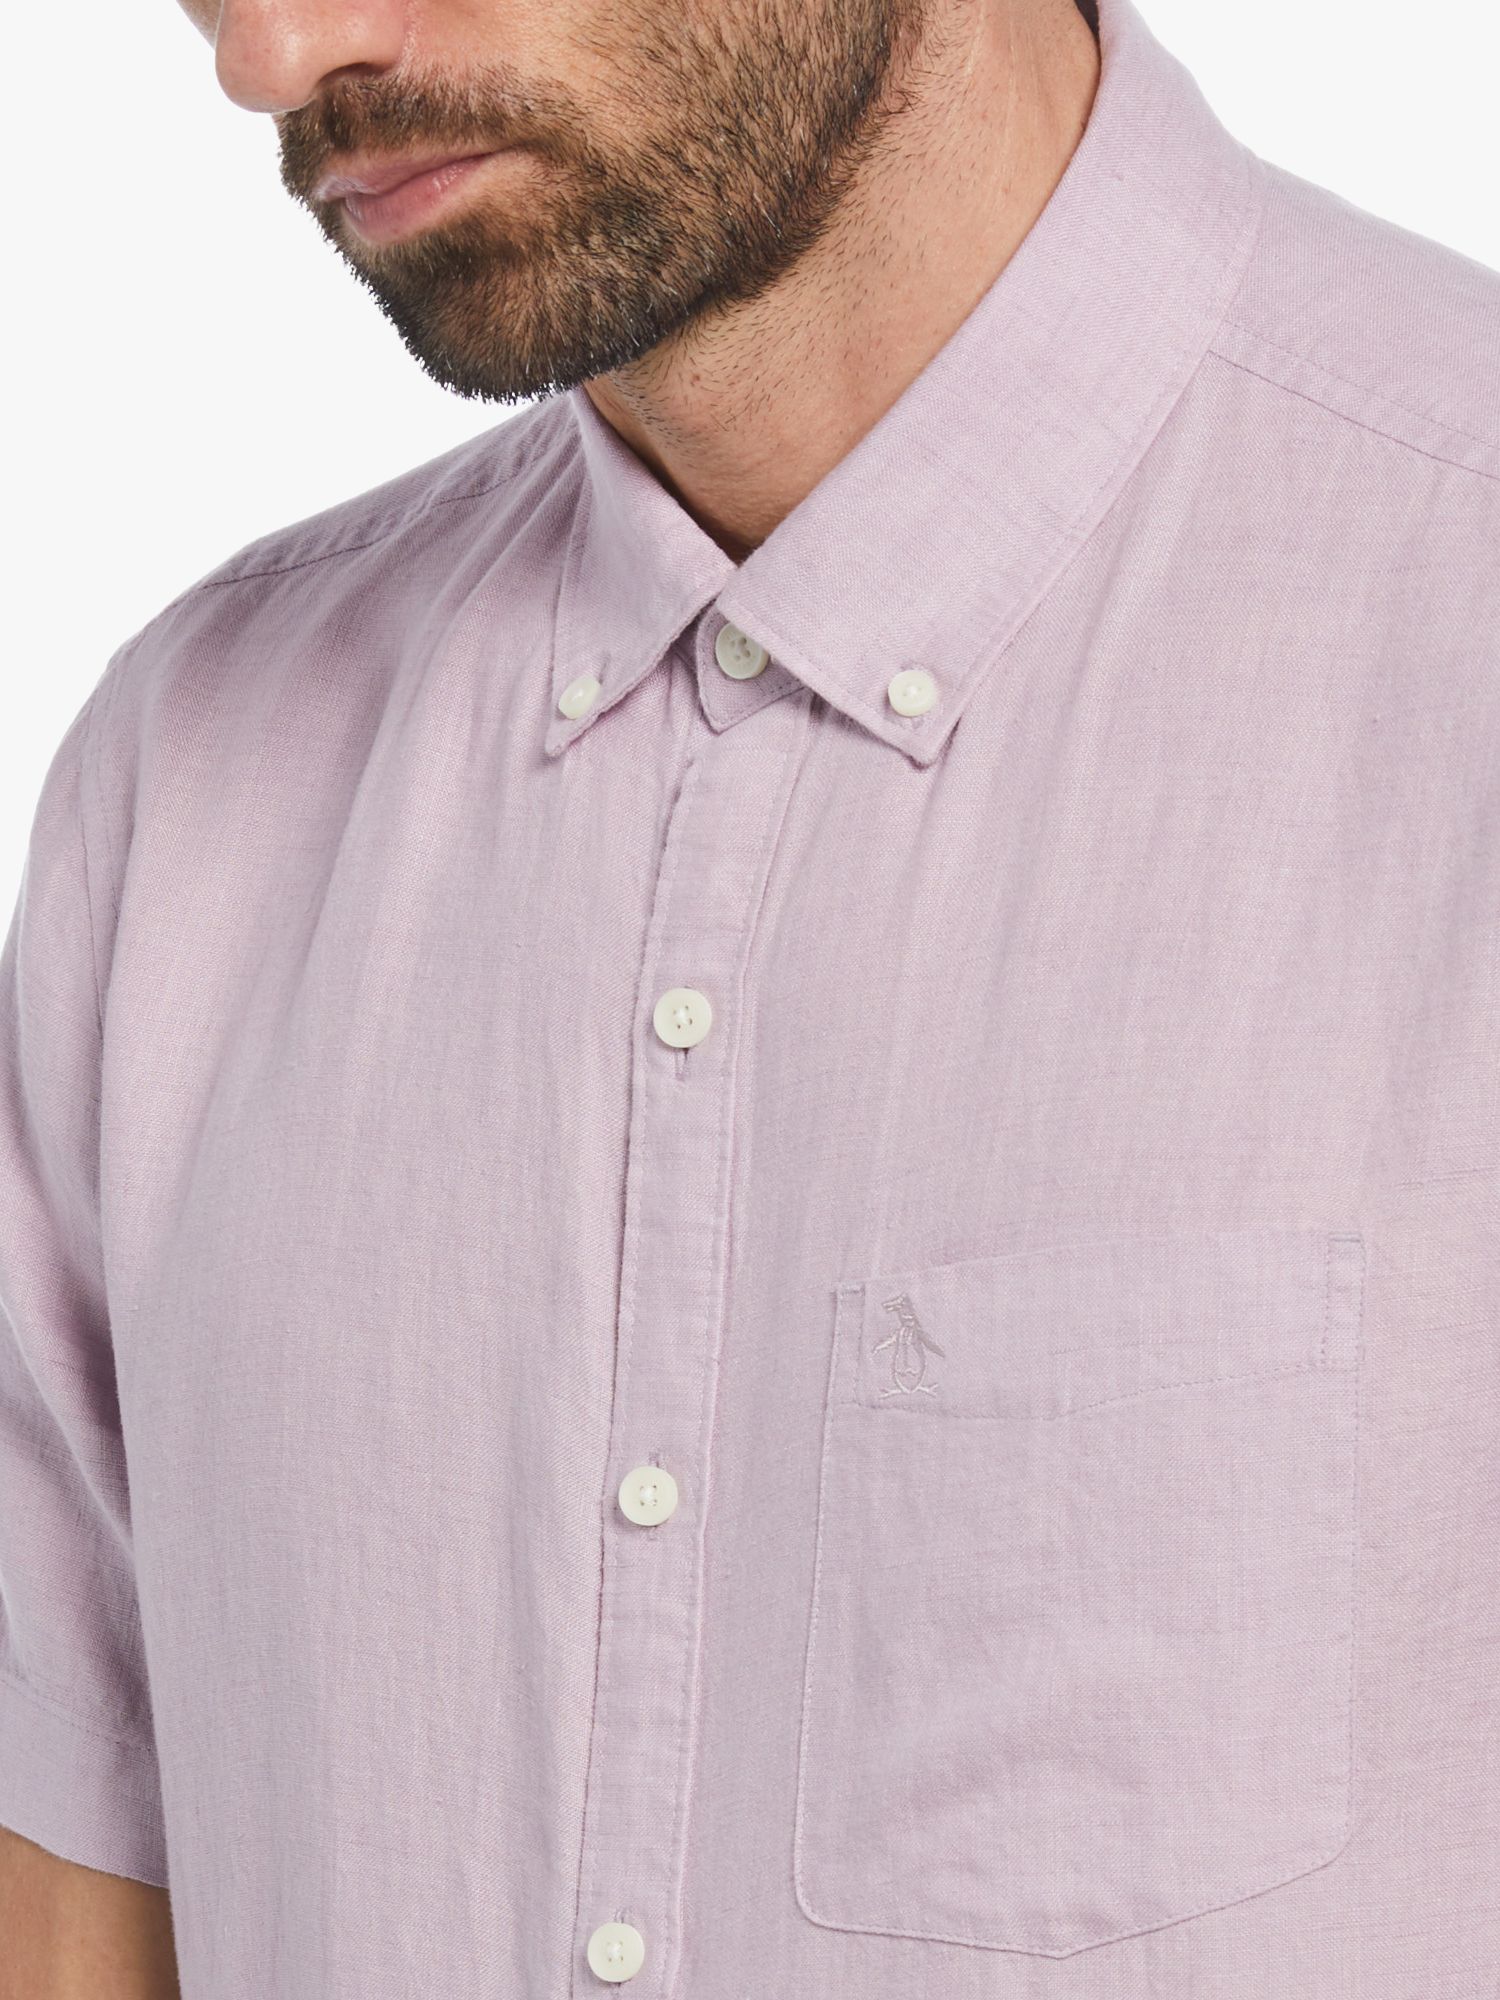 Original Penguin Linen Short Sleeve Shirt, Lavender Frost, M